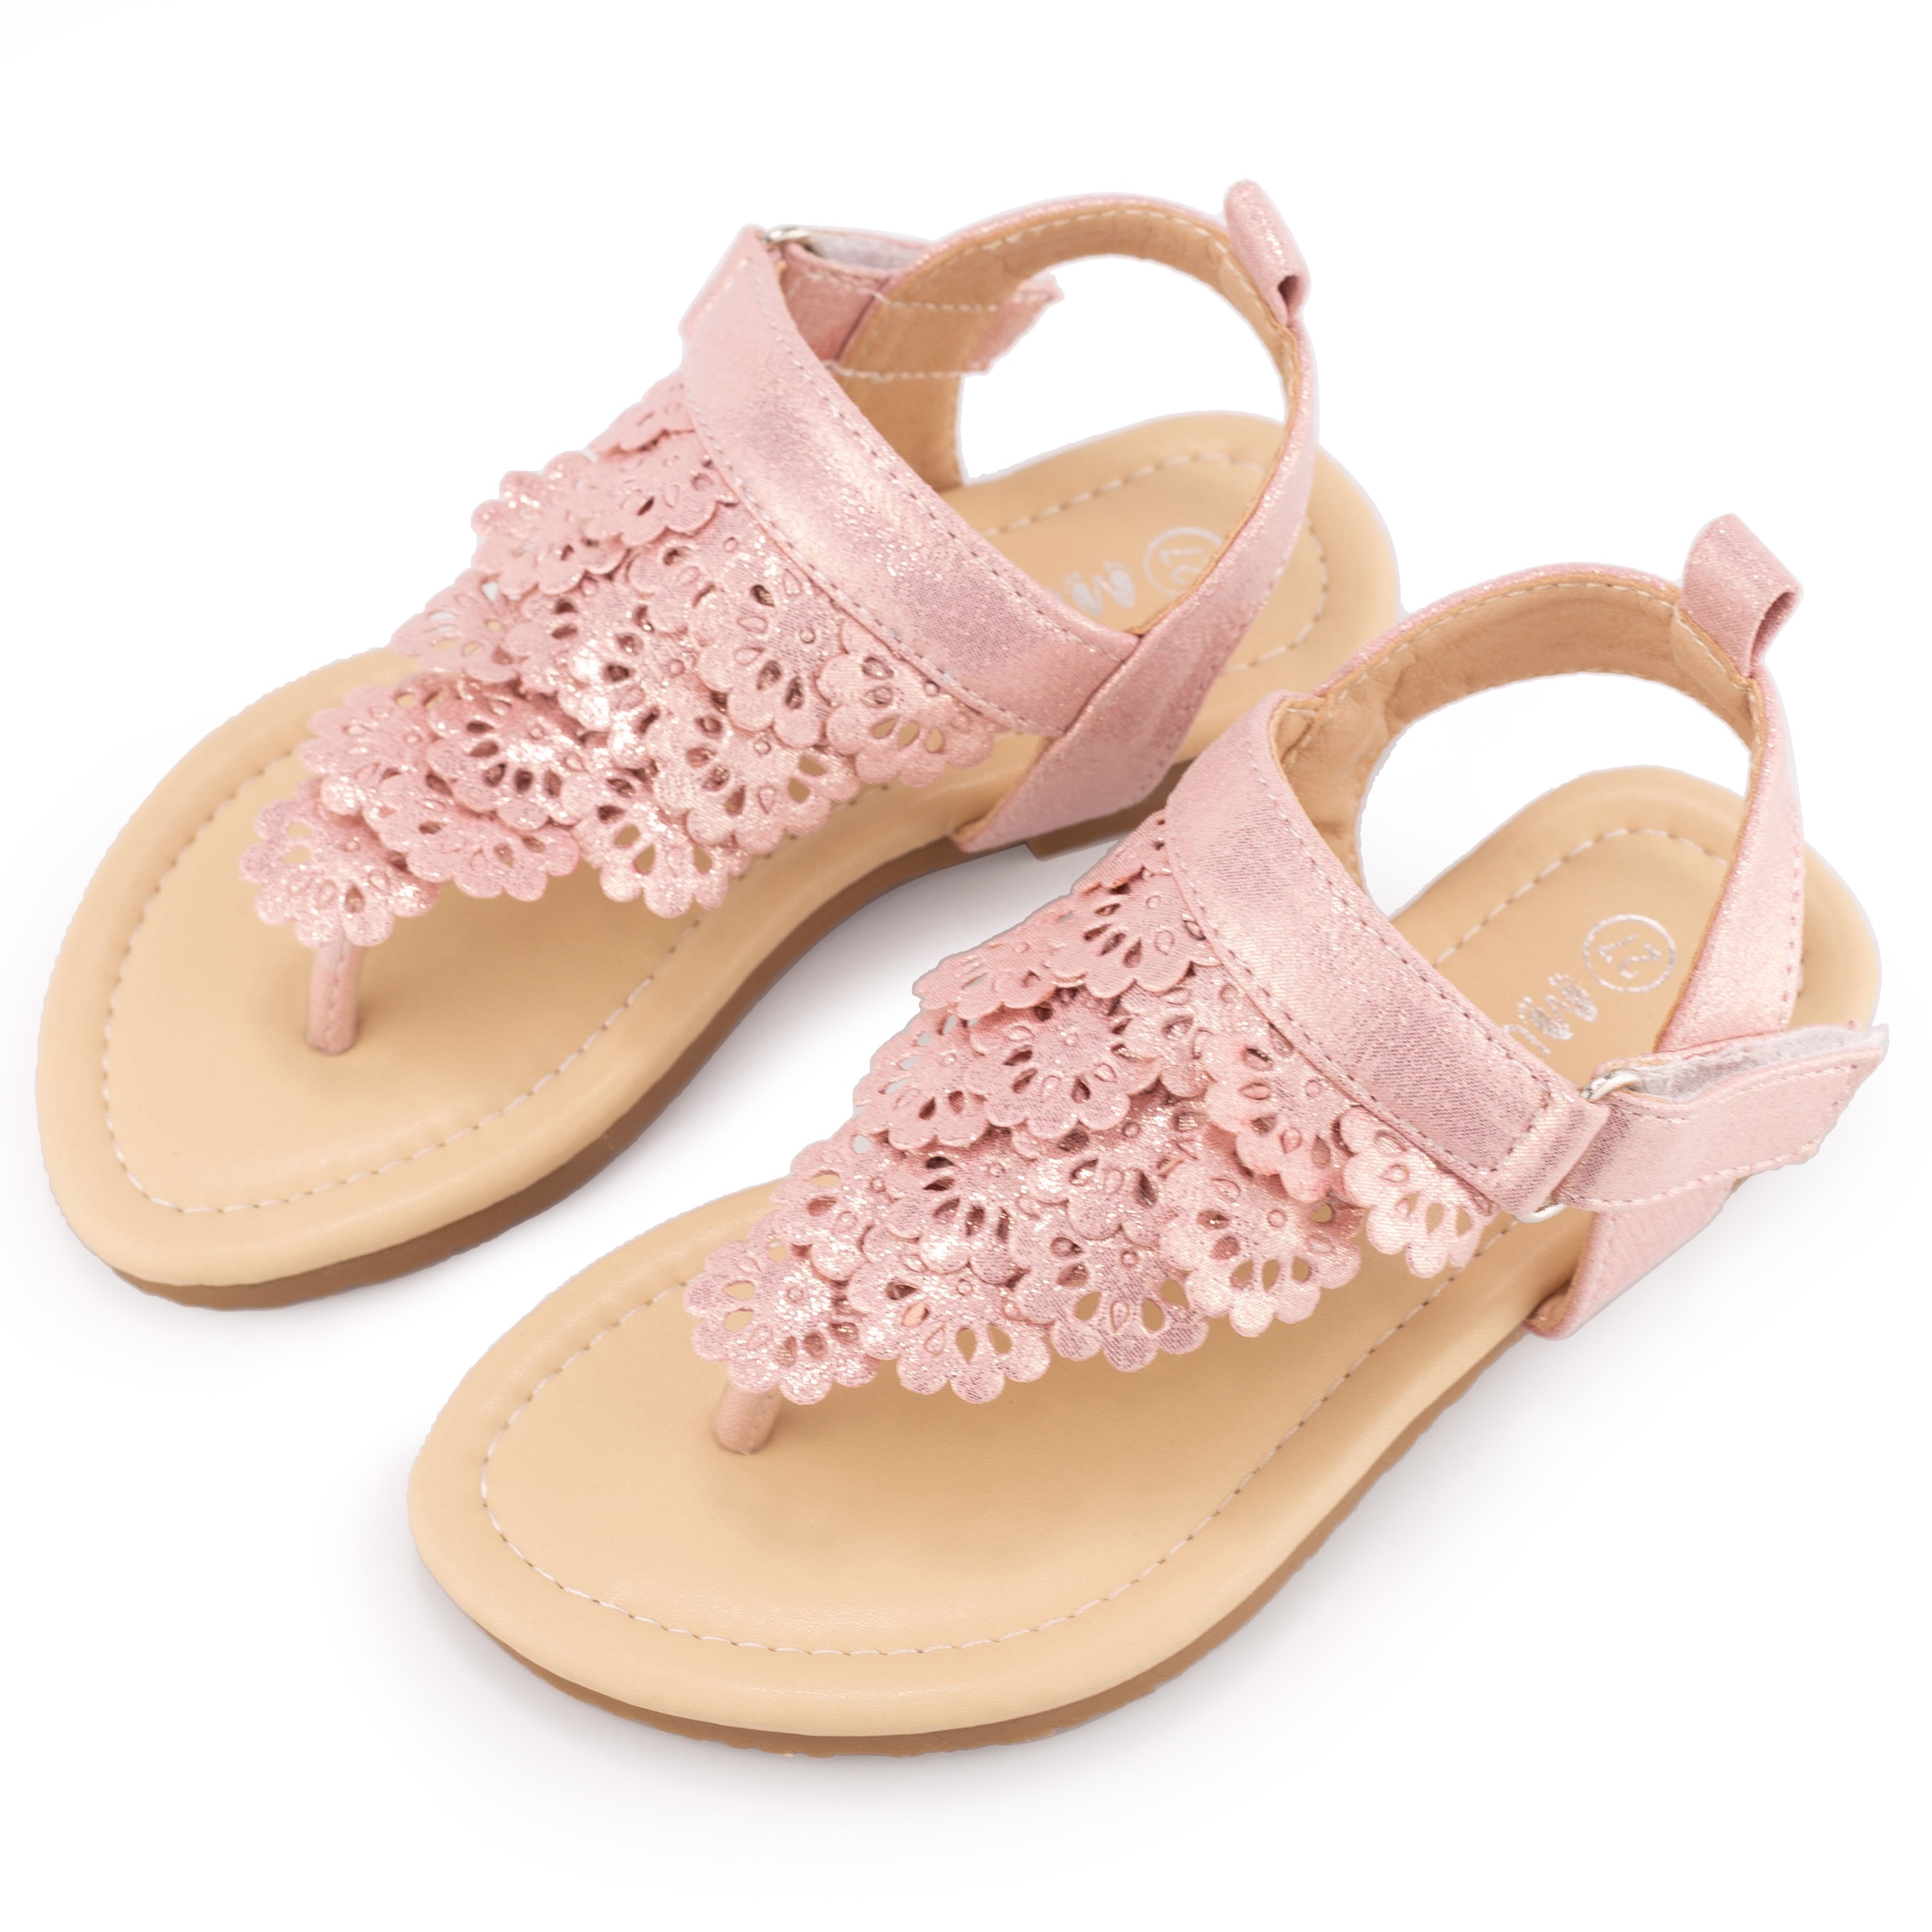 MUYGUAY Toddler Little Girls Sandals Flip Flops Open-toe Ankle Strap Summer Dress Shoes